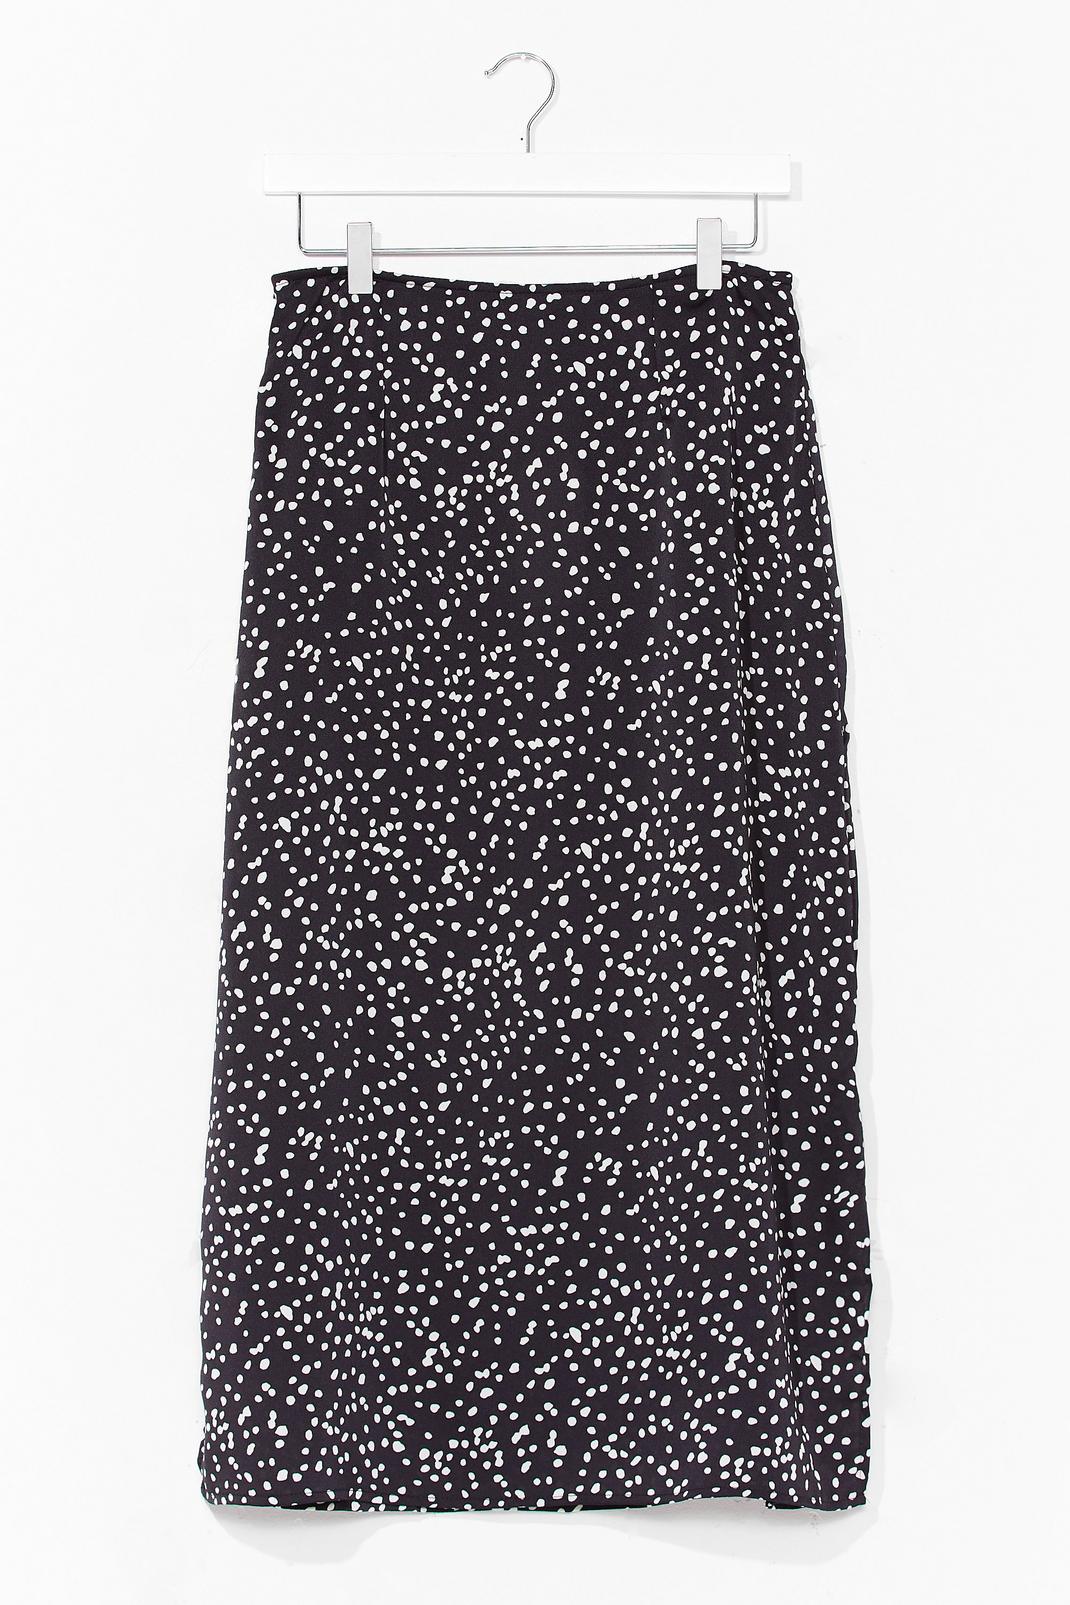 Black Polka Dot Flowy Midi Skirt image number 1